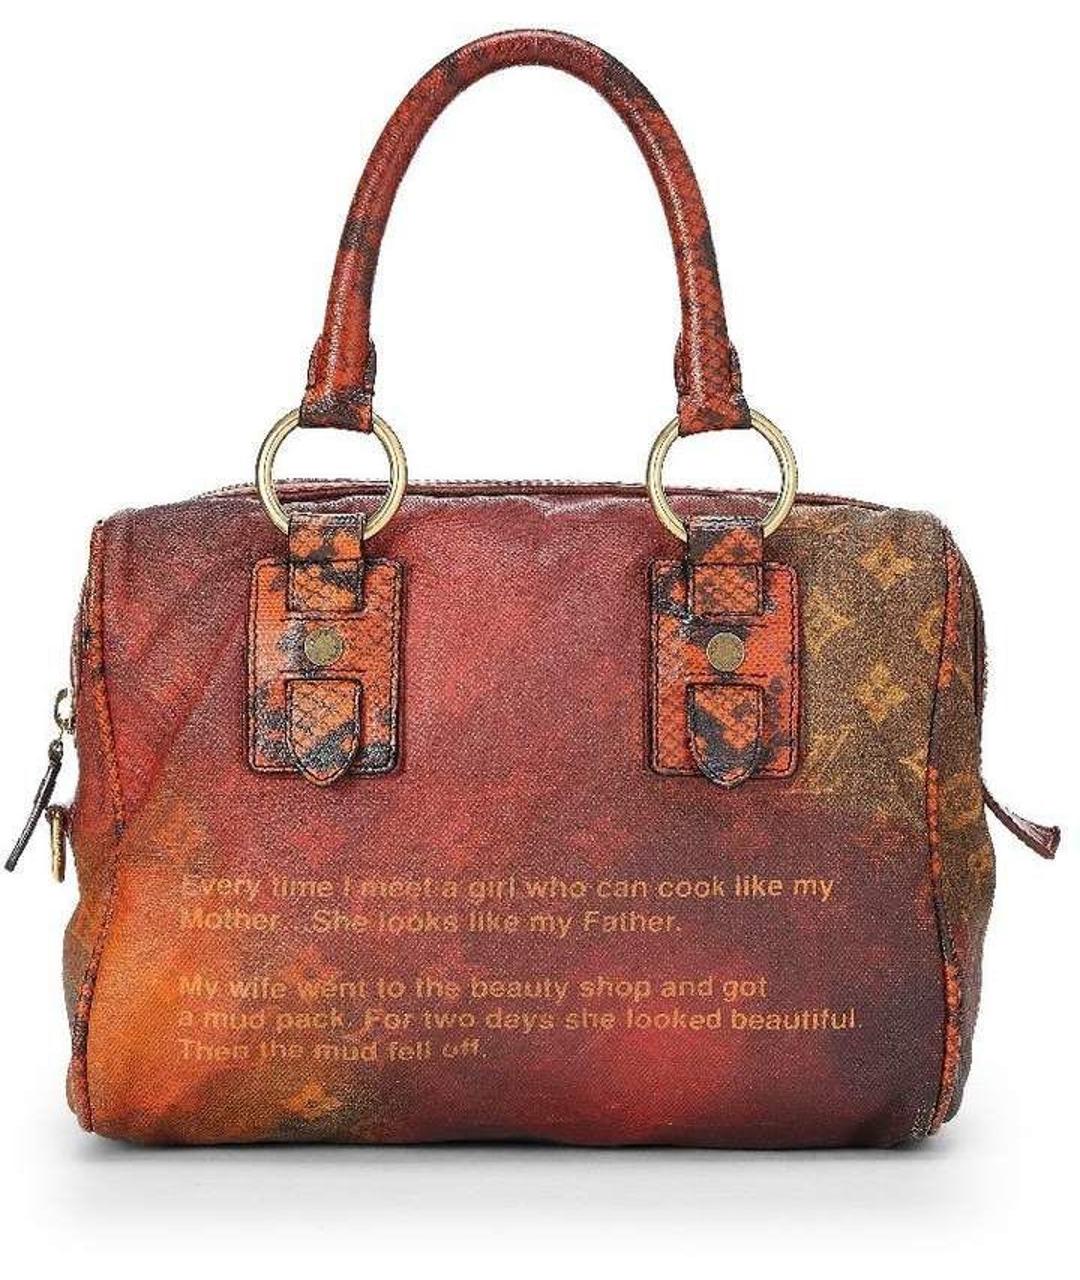 LOUIS VUITTON PRE-OWNED Бордовая кожаная сумка с короткими ручками, фото 1